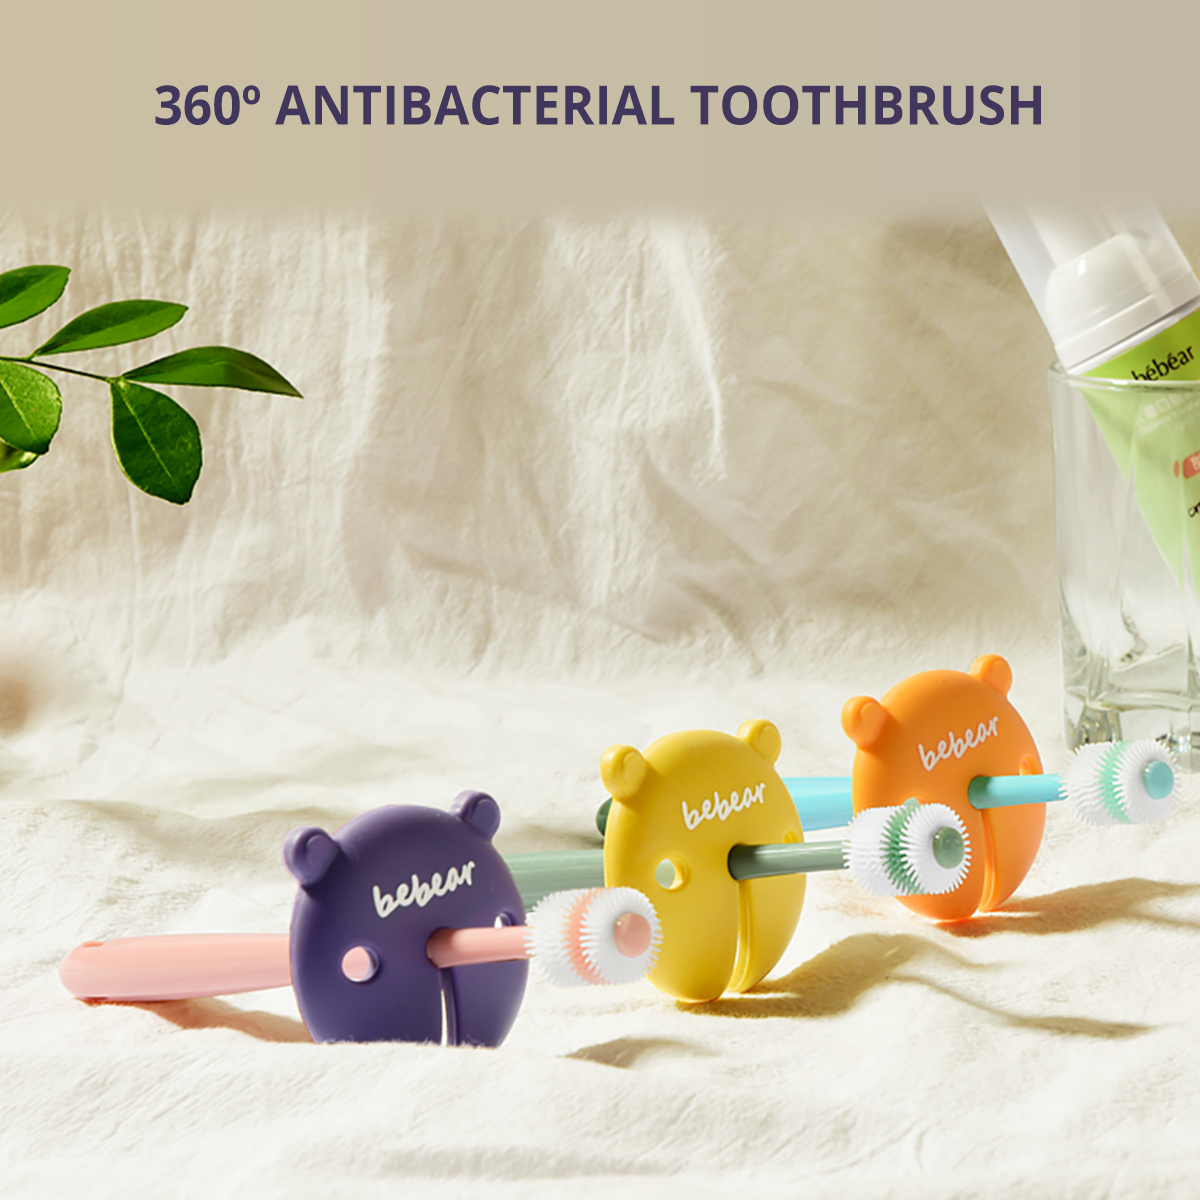 360° Antibacterial Toothbrush